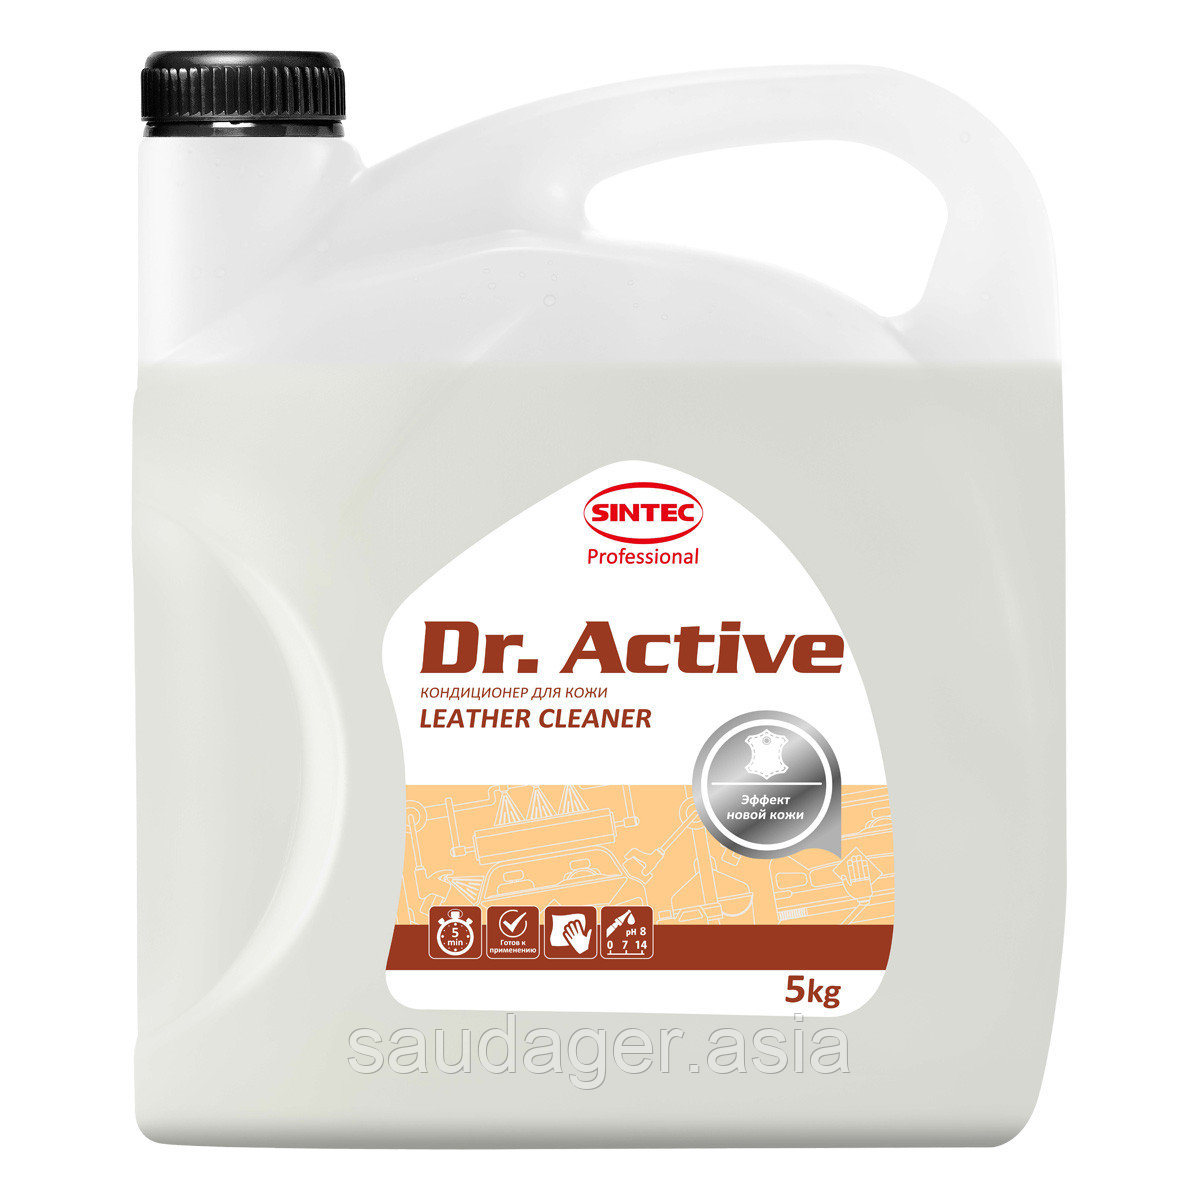 Sintec Dr. Active Кондиционер для кожи "Leather Cleaner" (5 кг)